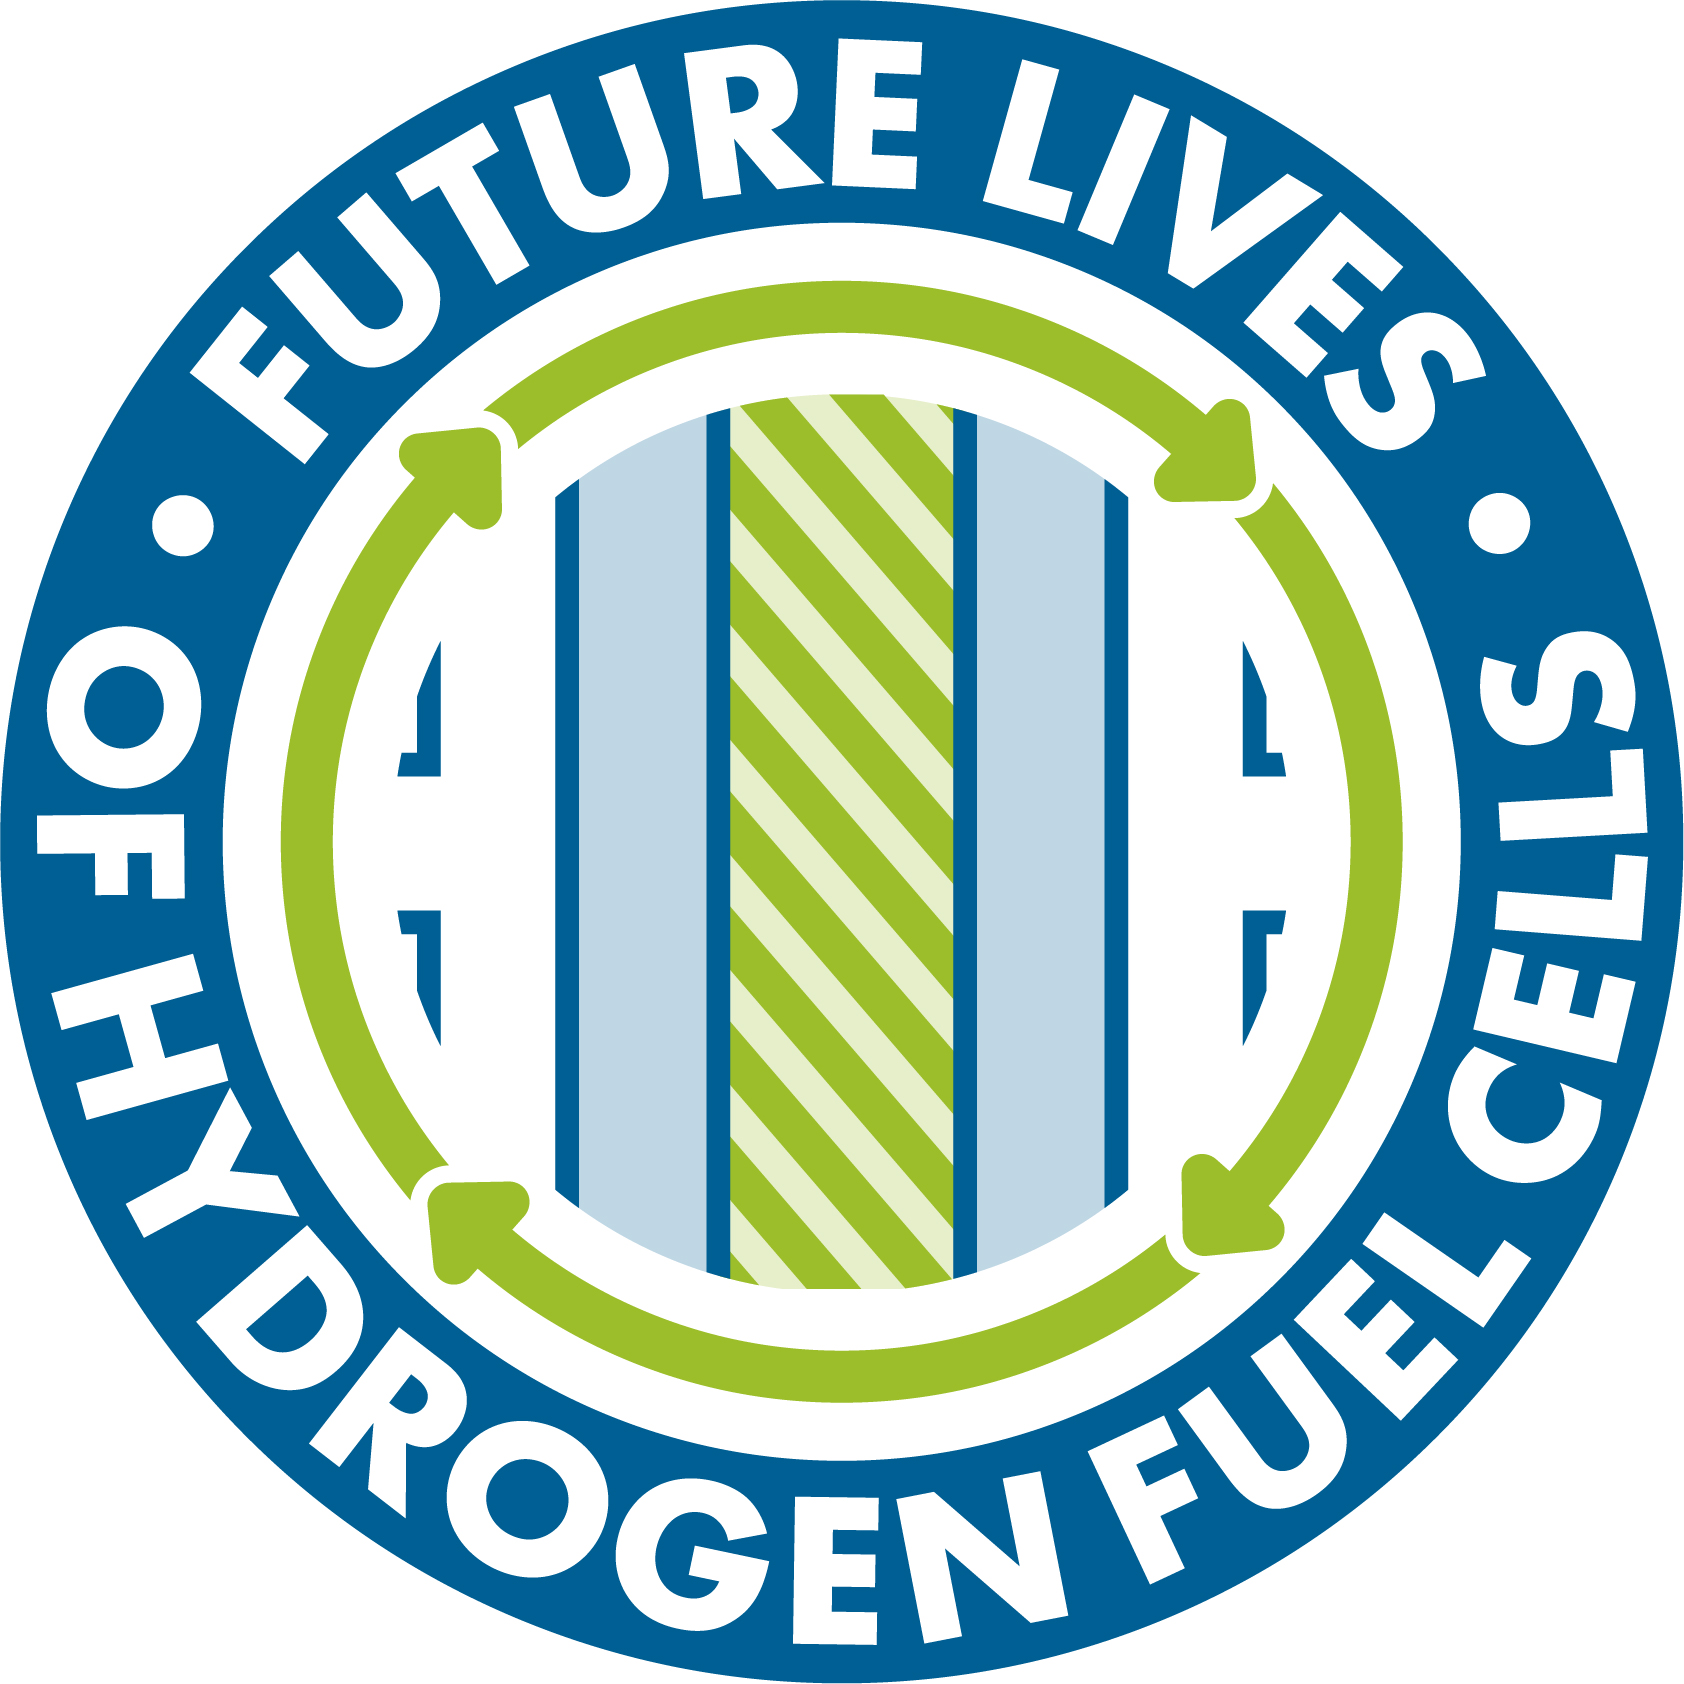 Future lives of hydrogen fuel cells logo